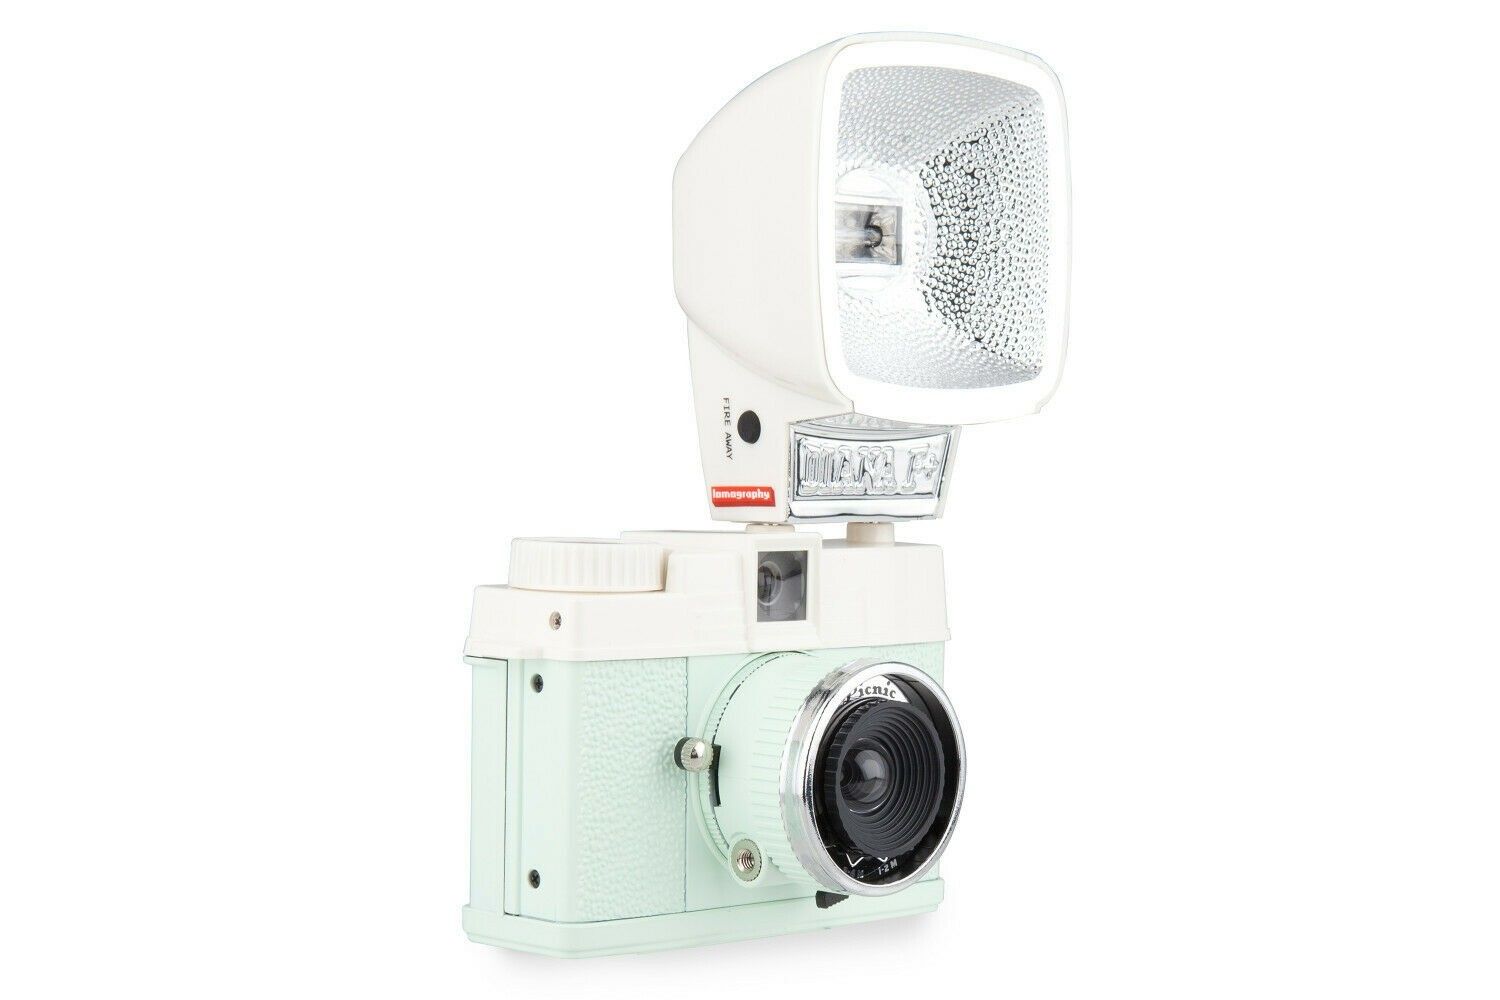 Lomography Diana Mini 35mm Film Camera Picnic Edition